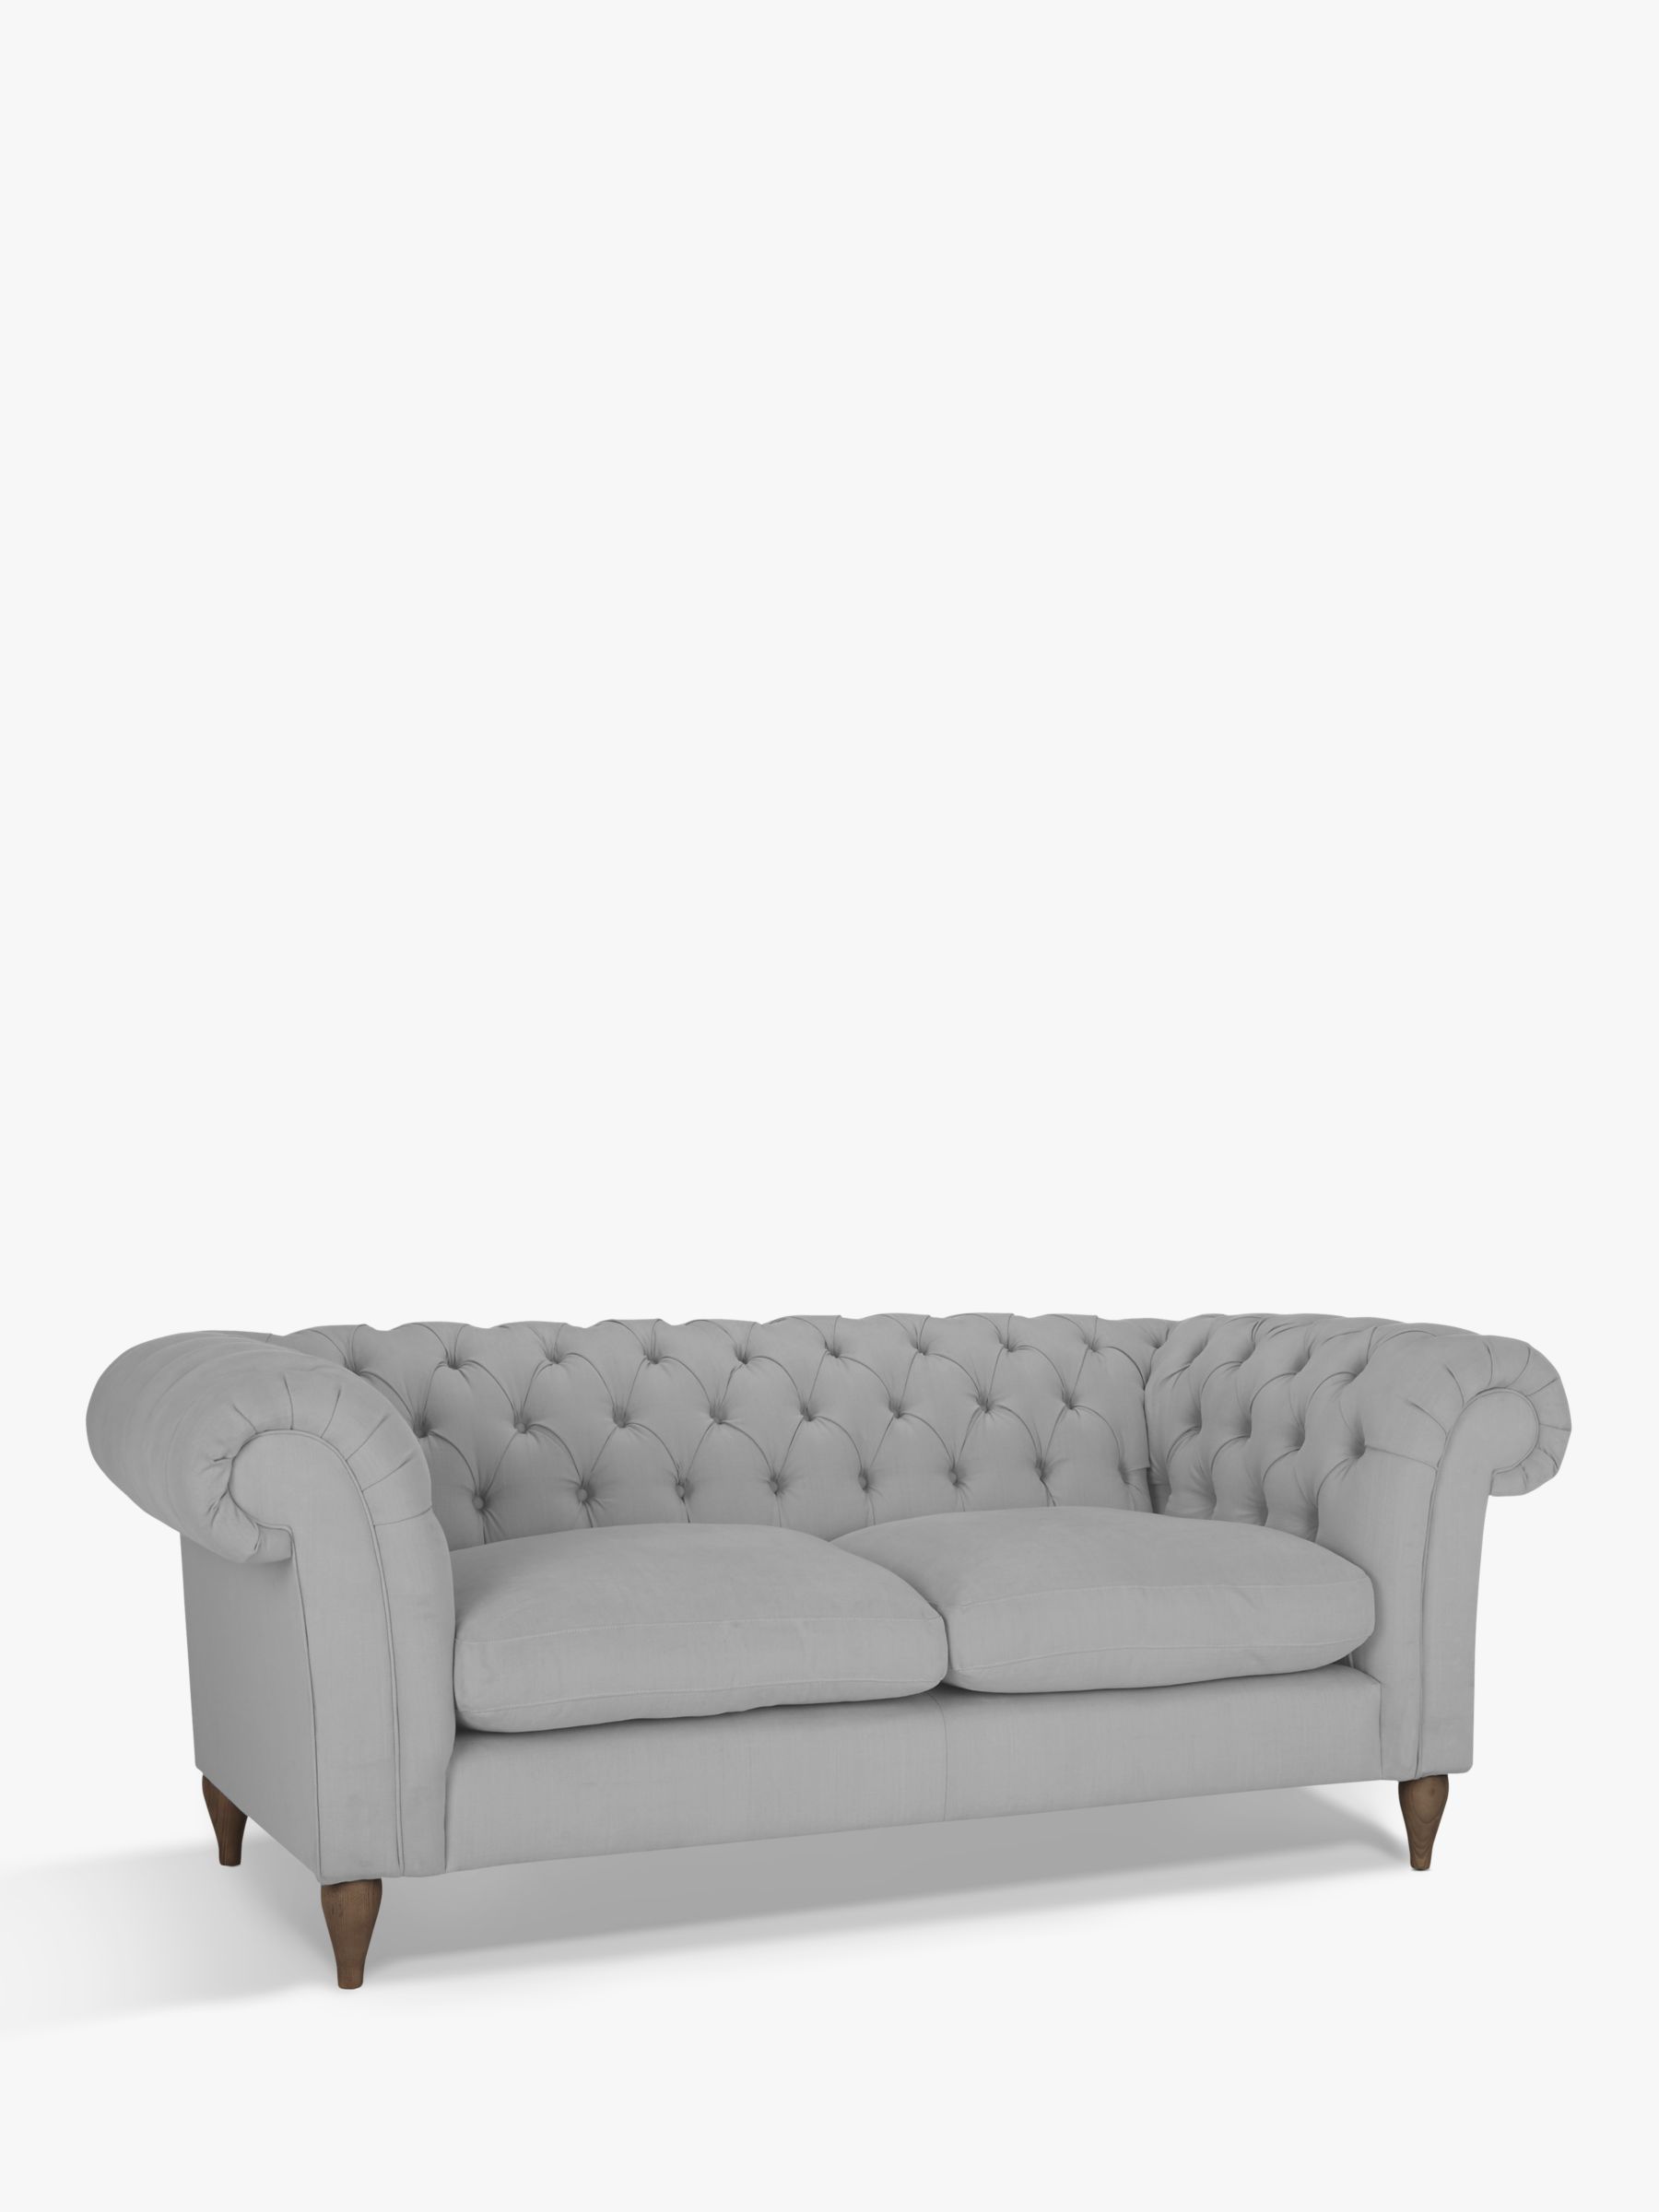 Chesterfield Sofa Fabric